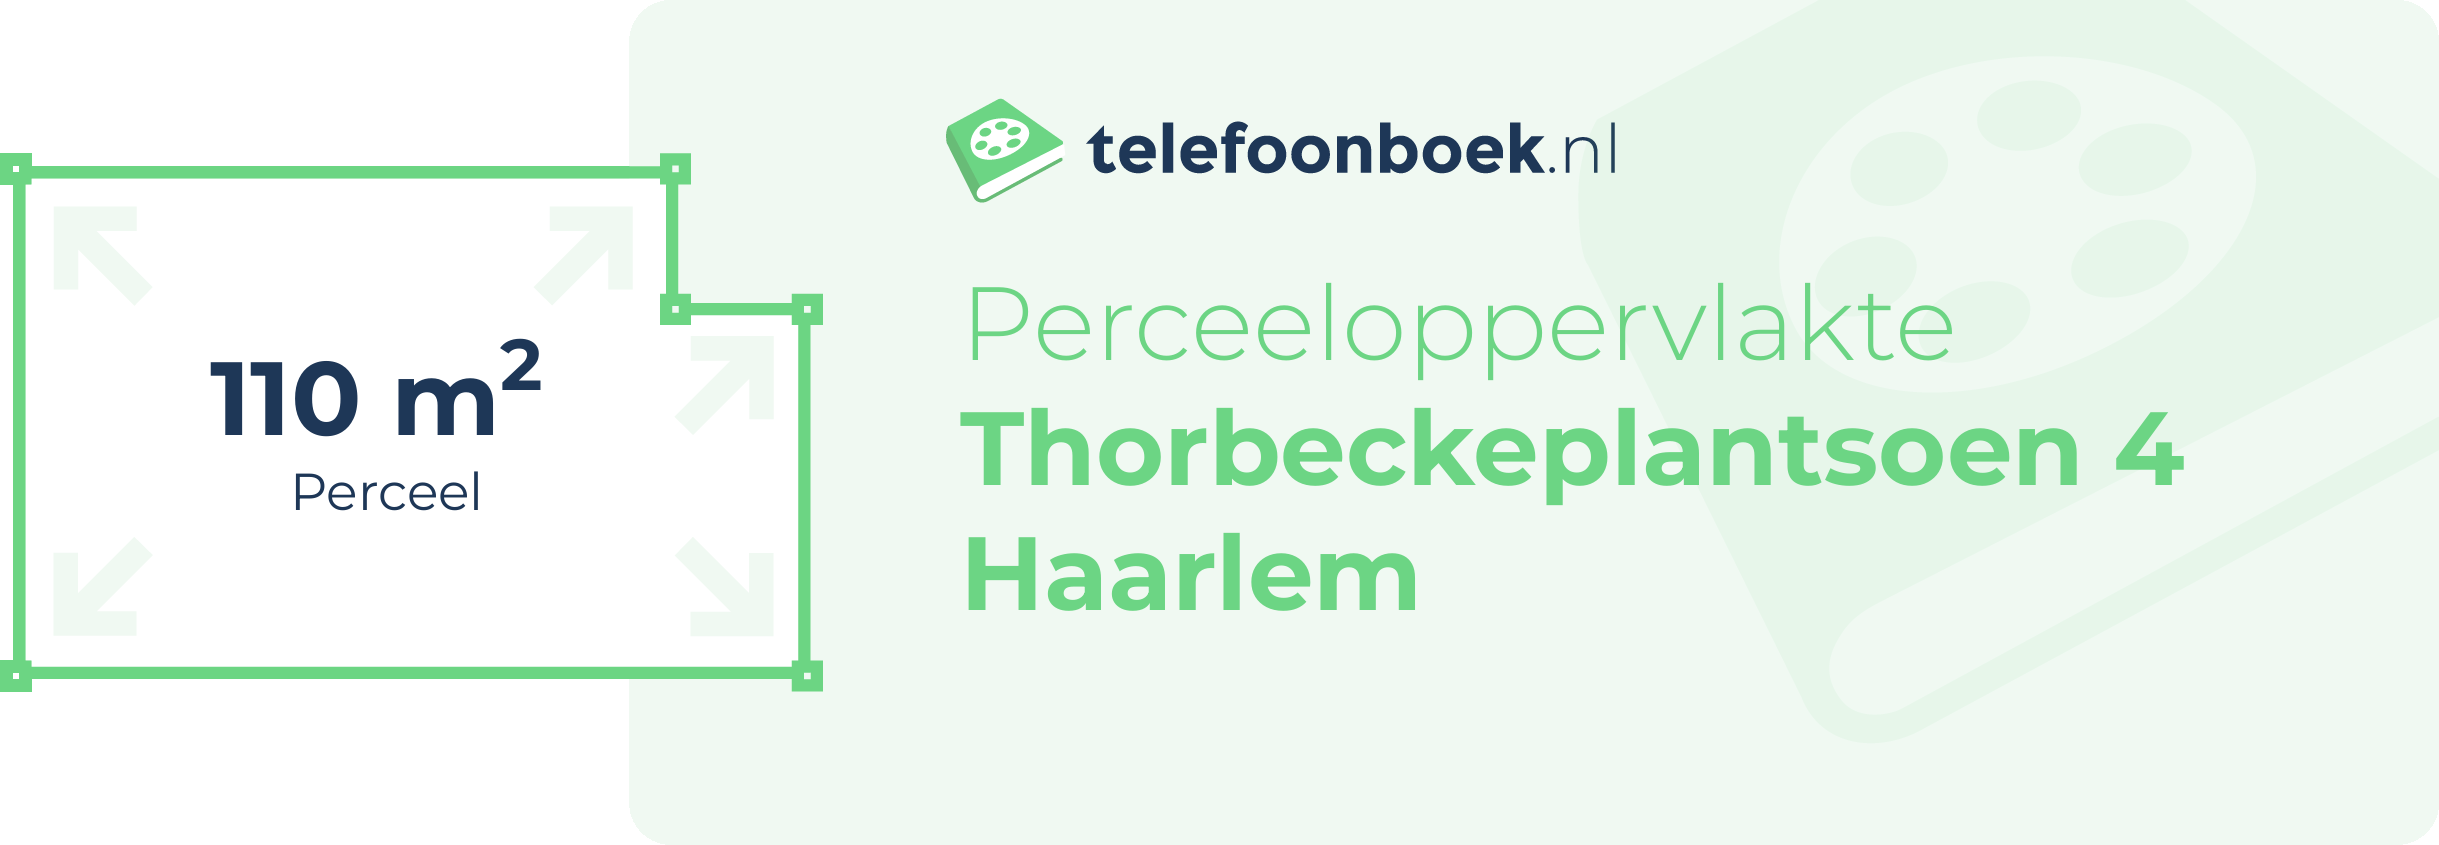 Perceeloppervlakte Thorbeckeplantsoen 4 Haarlem